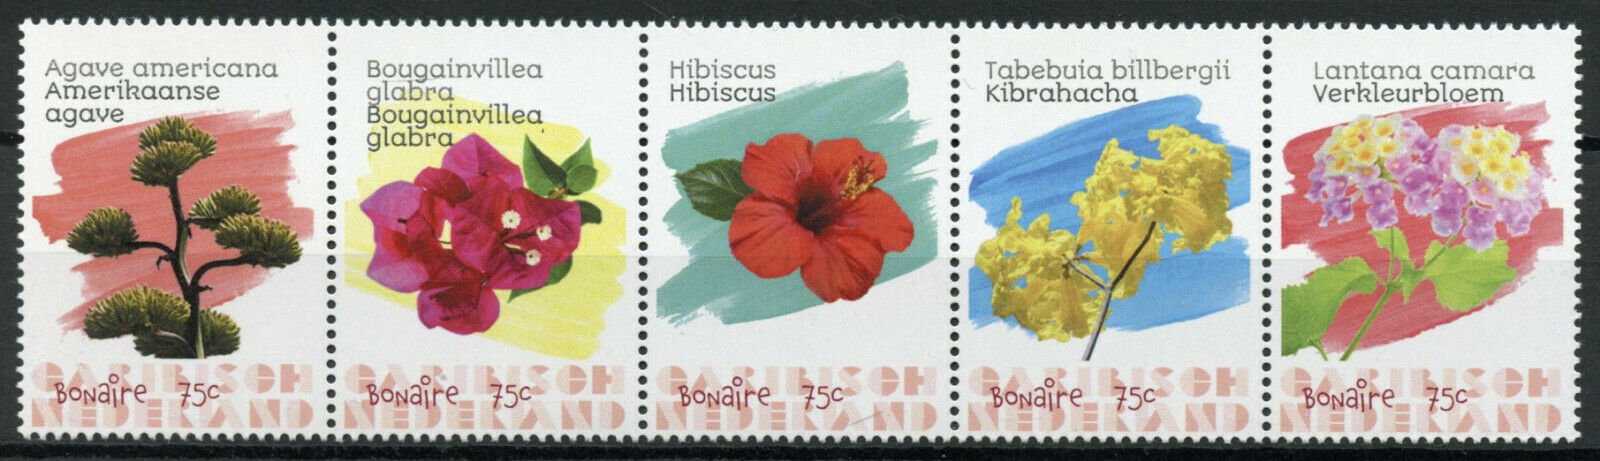 Bonaire Caribbean Netherlands Flowers Stamps 2020 MNH Hibiscus Agave 5v Strip